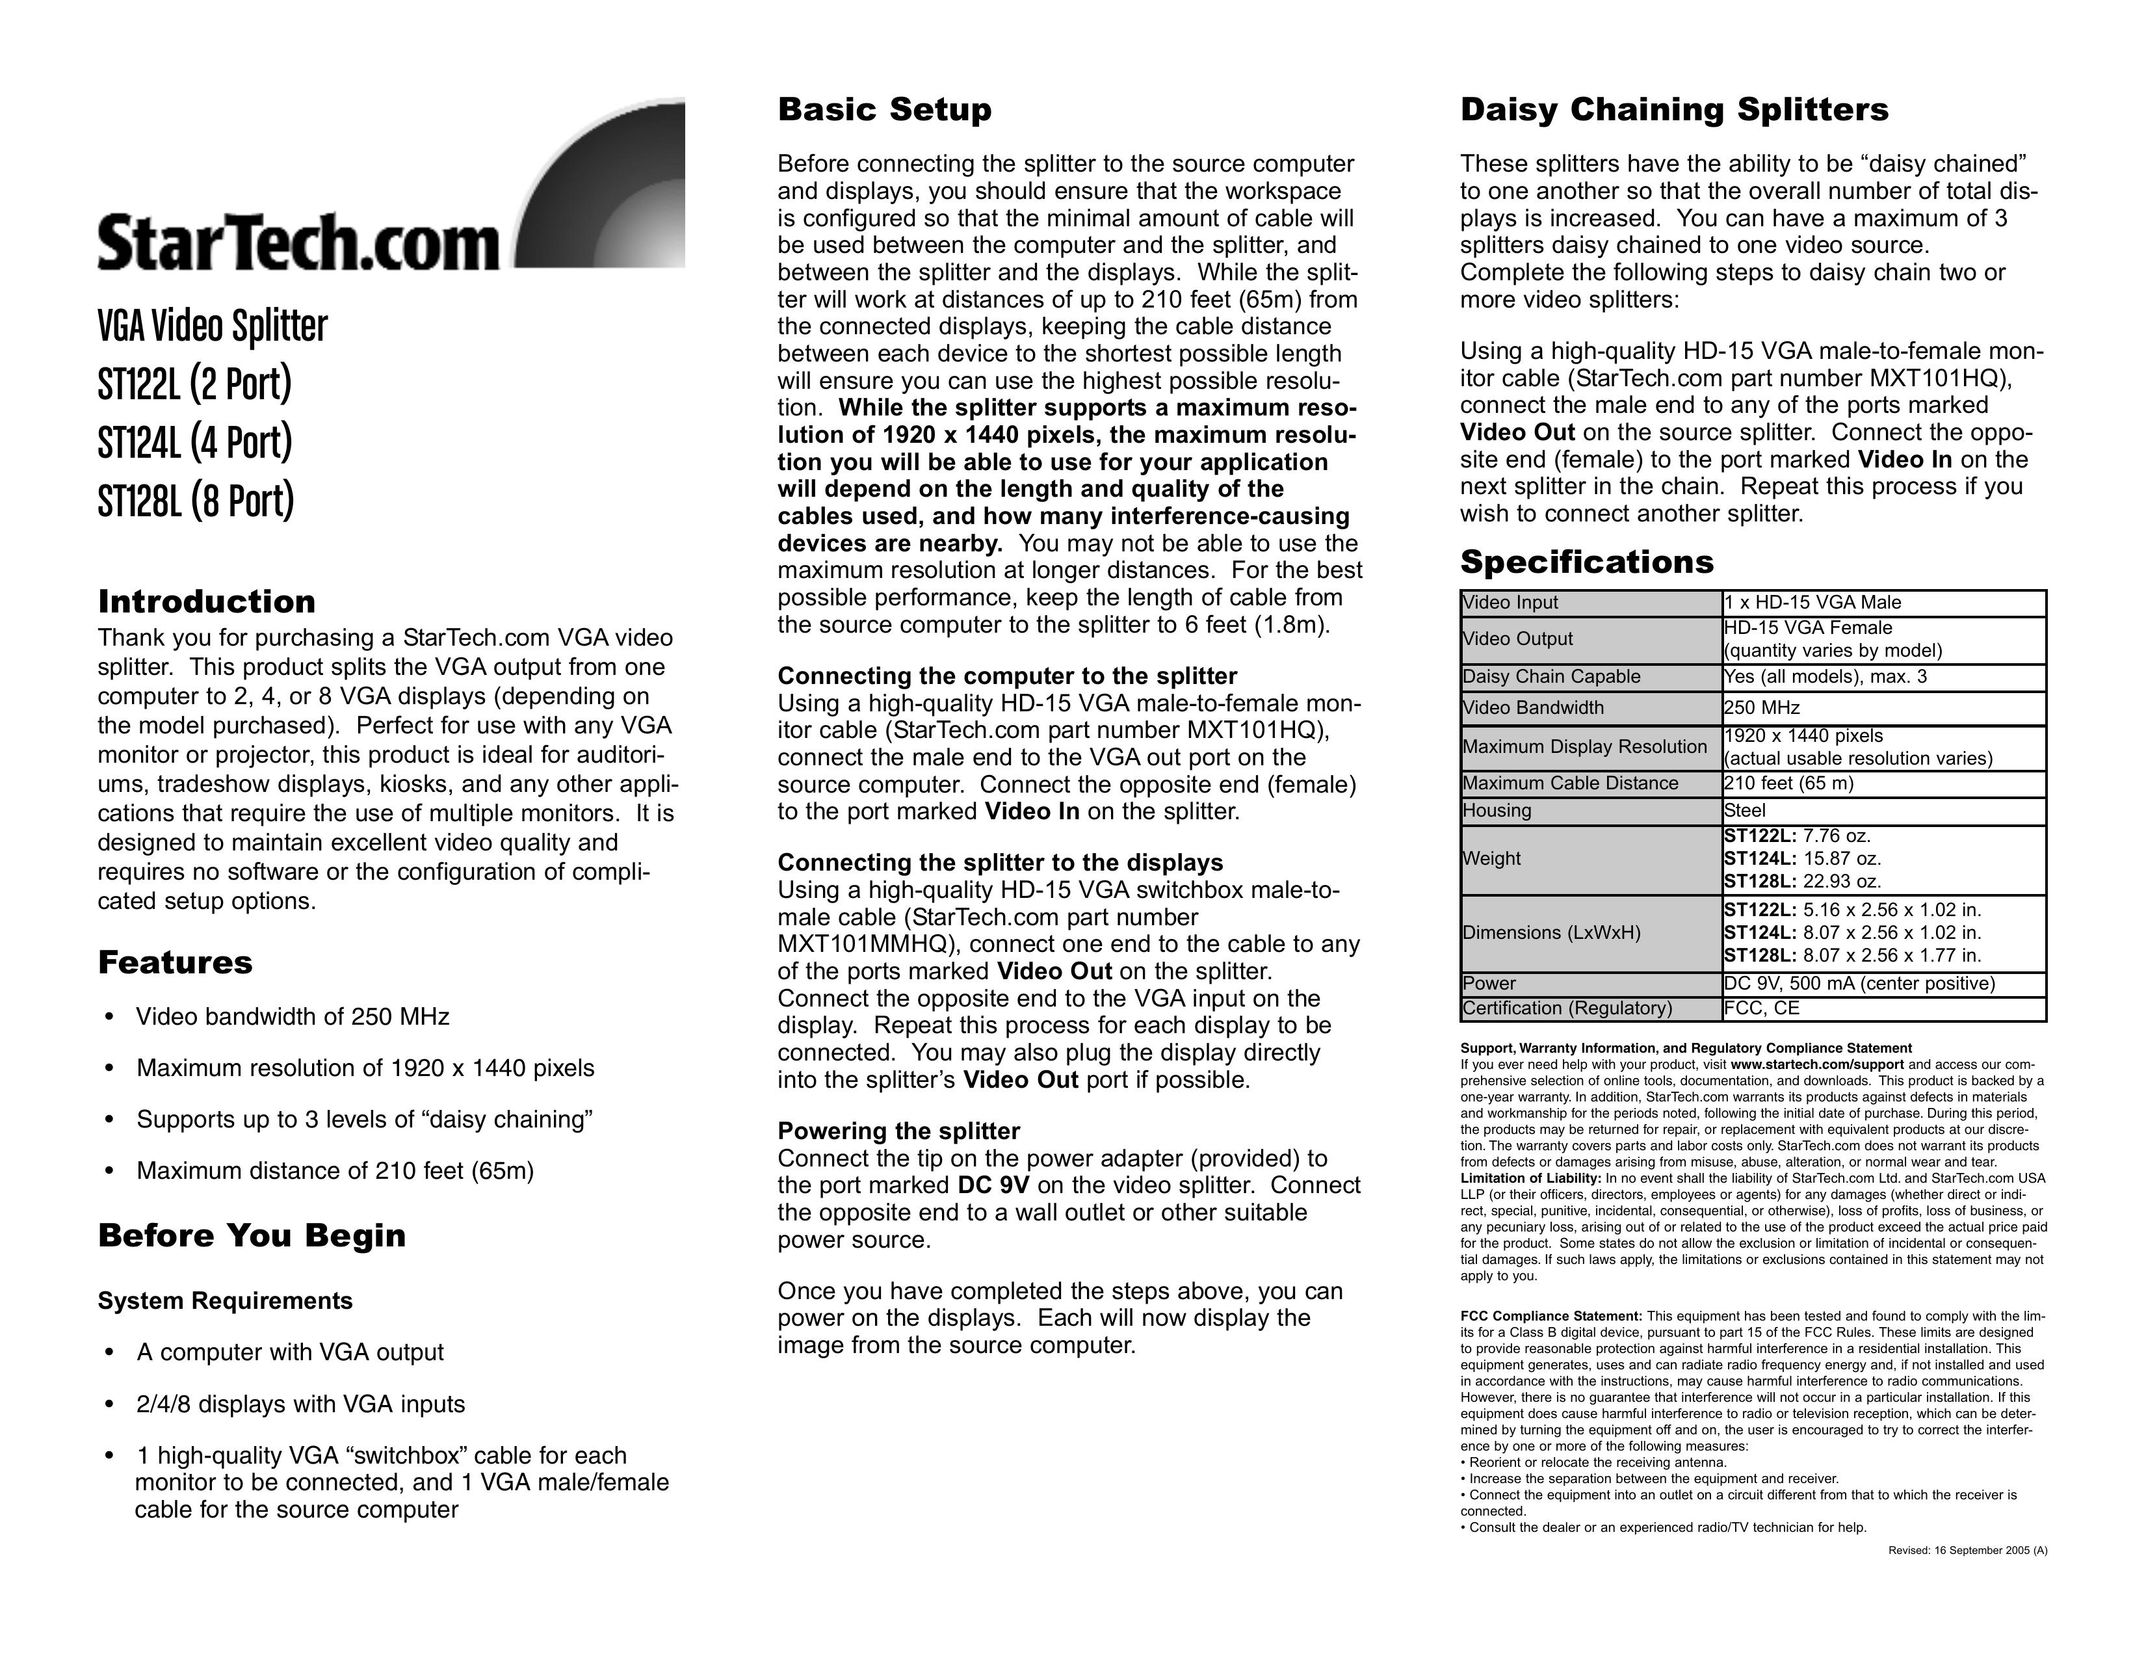 StarTech.com STI22L Webcam User Manual